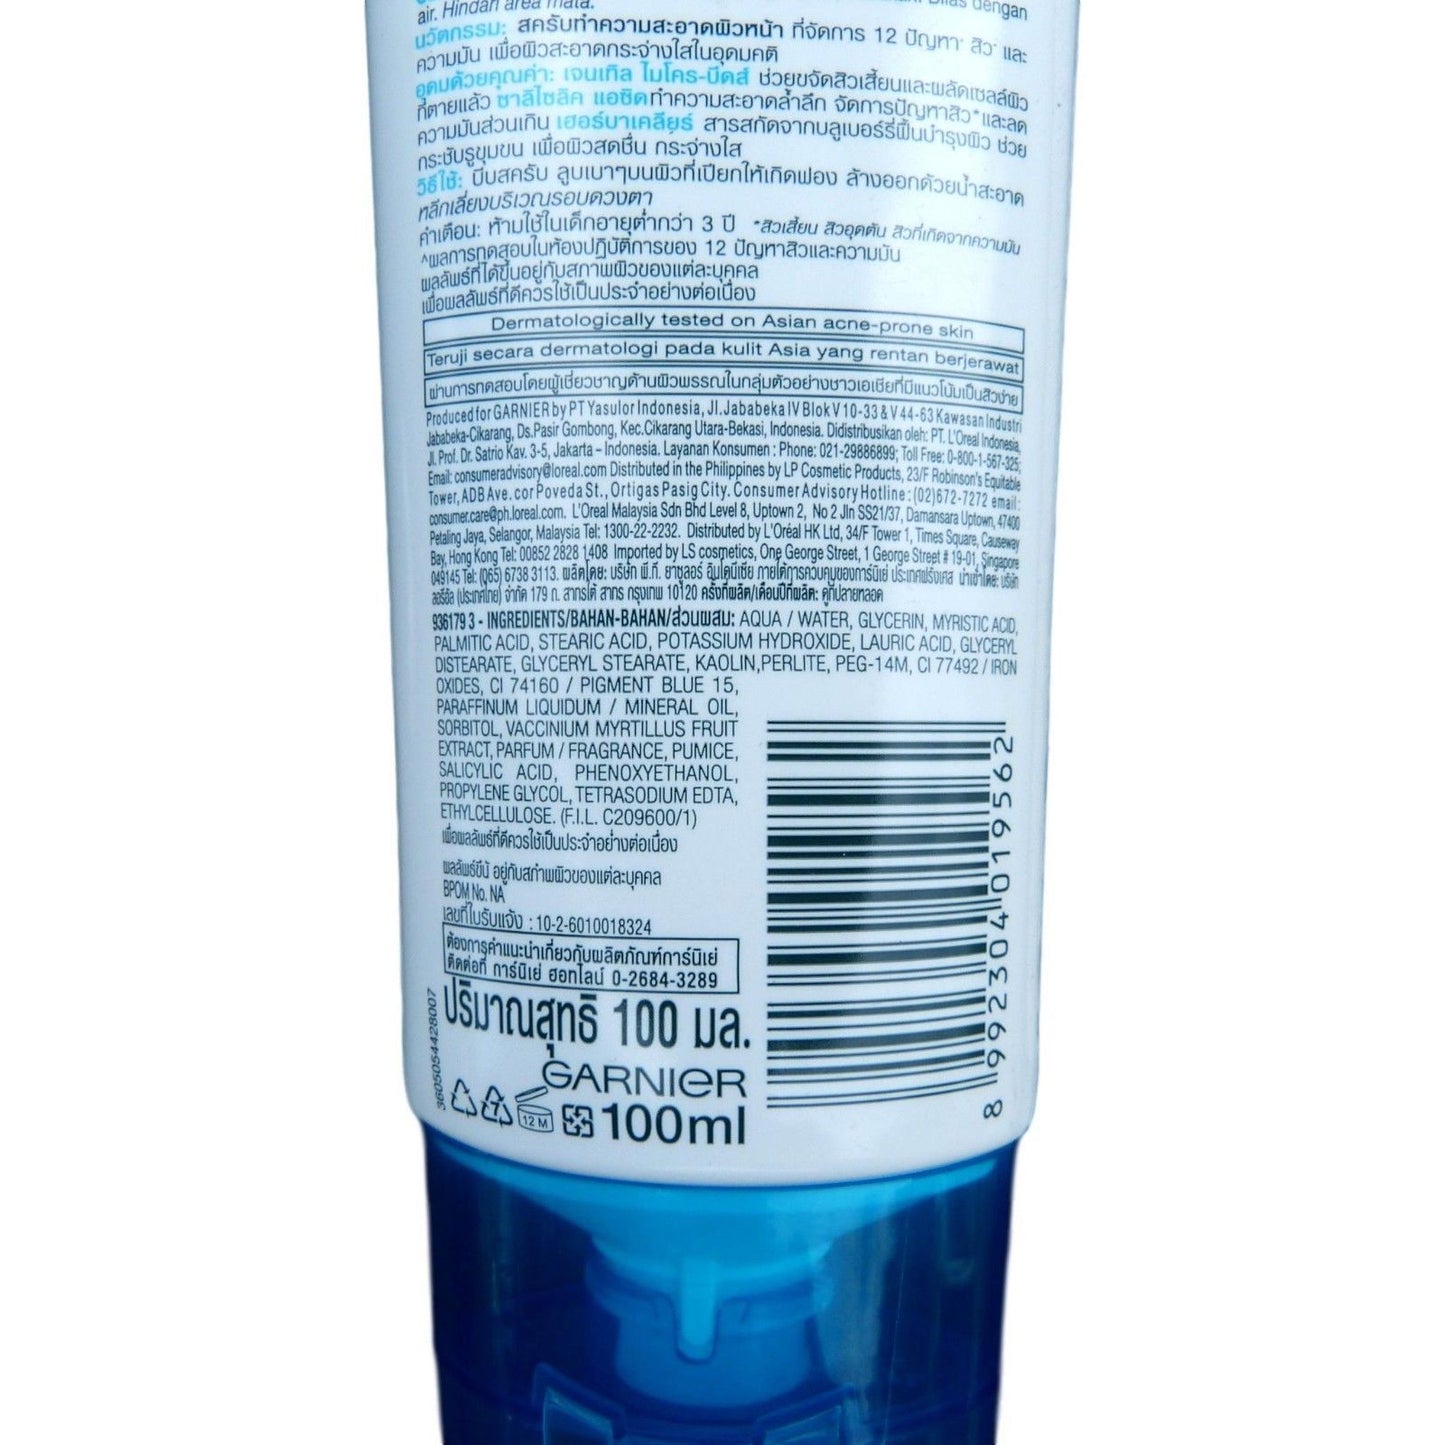 Garnier Pure Active Anti Acne White Oil Clearing Scrub 100ml 3.4oz - Asian Beauty Supply